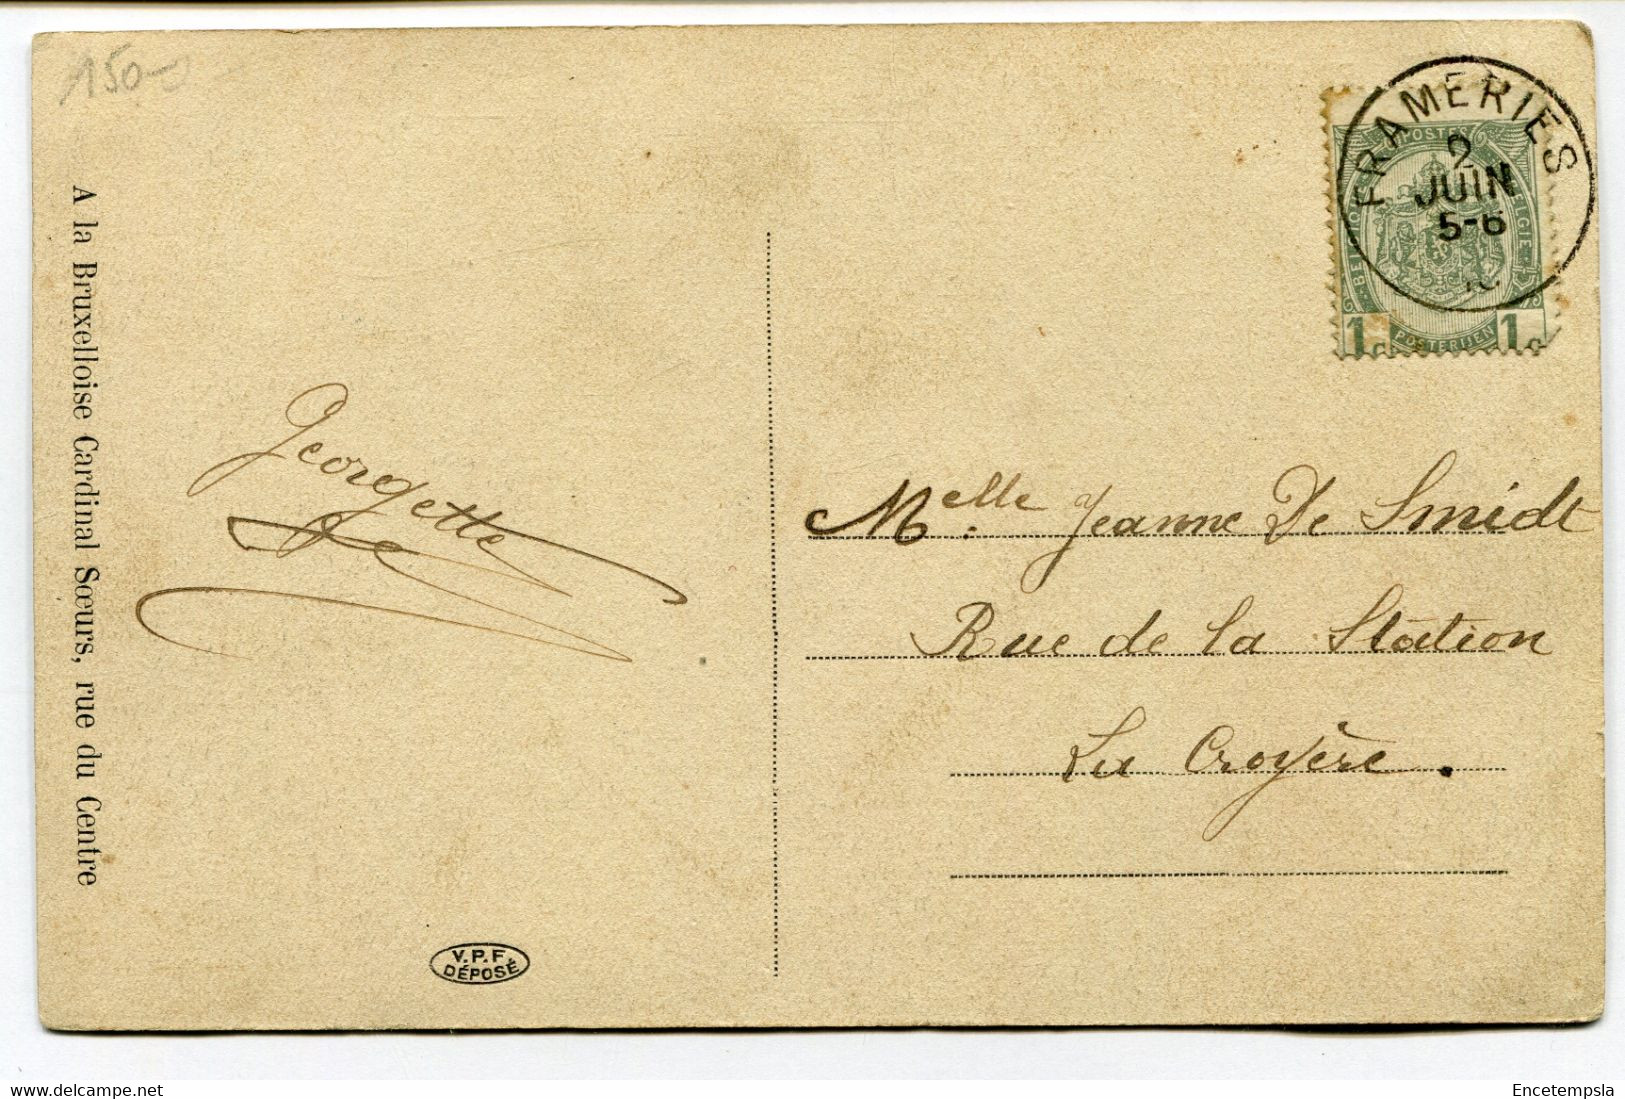 CPA - Carte Postale - Belgique - Frameries - L'Eglise - 1910 (DG14909) - Frameries